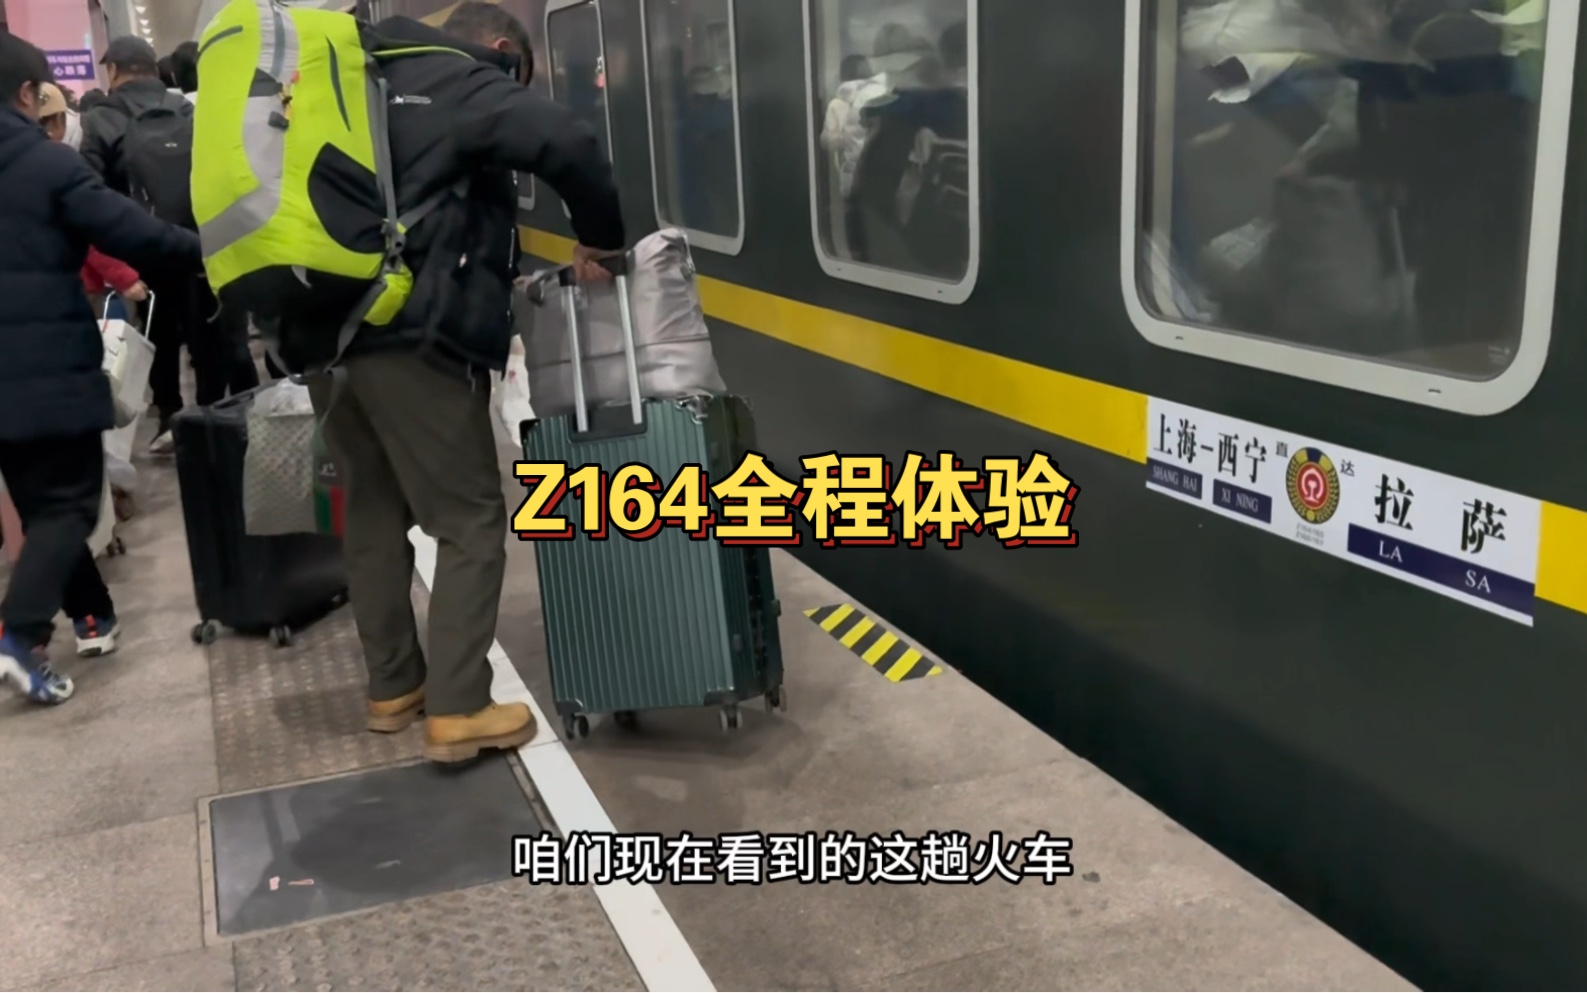 z164列车路线图图片